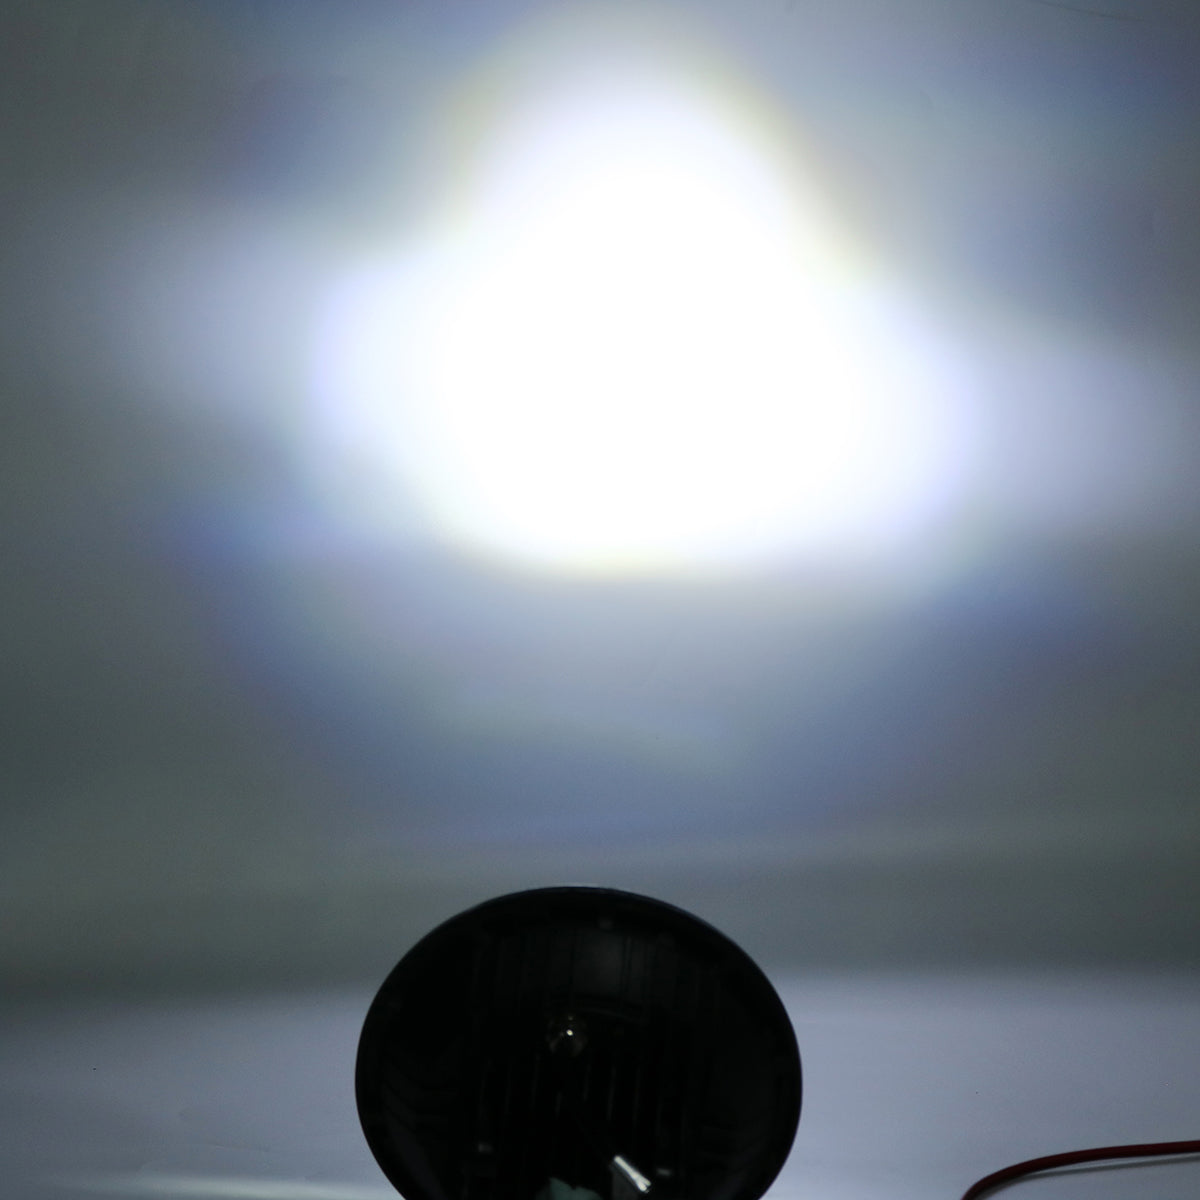 2pcs 7 inch 75W Round 13 LED Headlights Hi-Lo Beam Bulb For Harley/Jeep Wrangler JK TJ Black - Auto GoShop